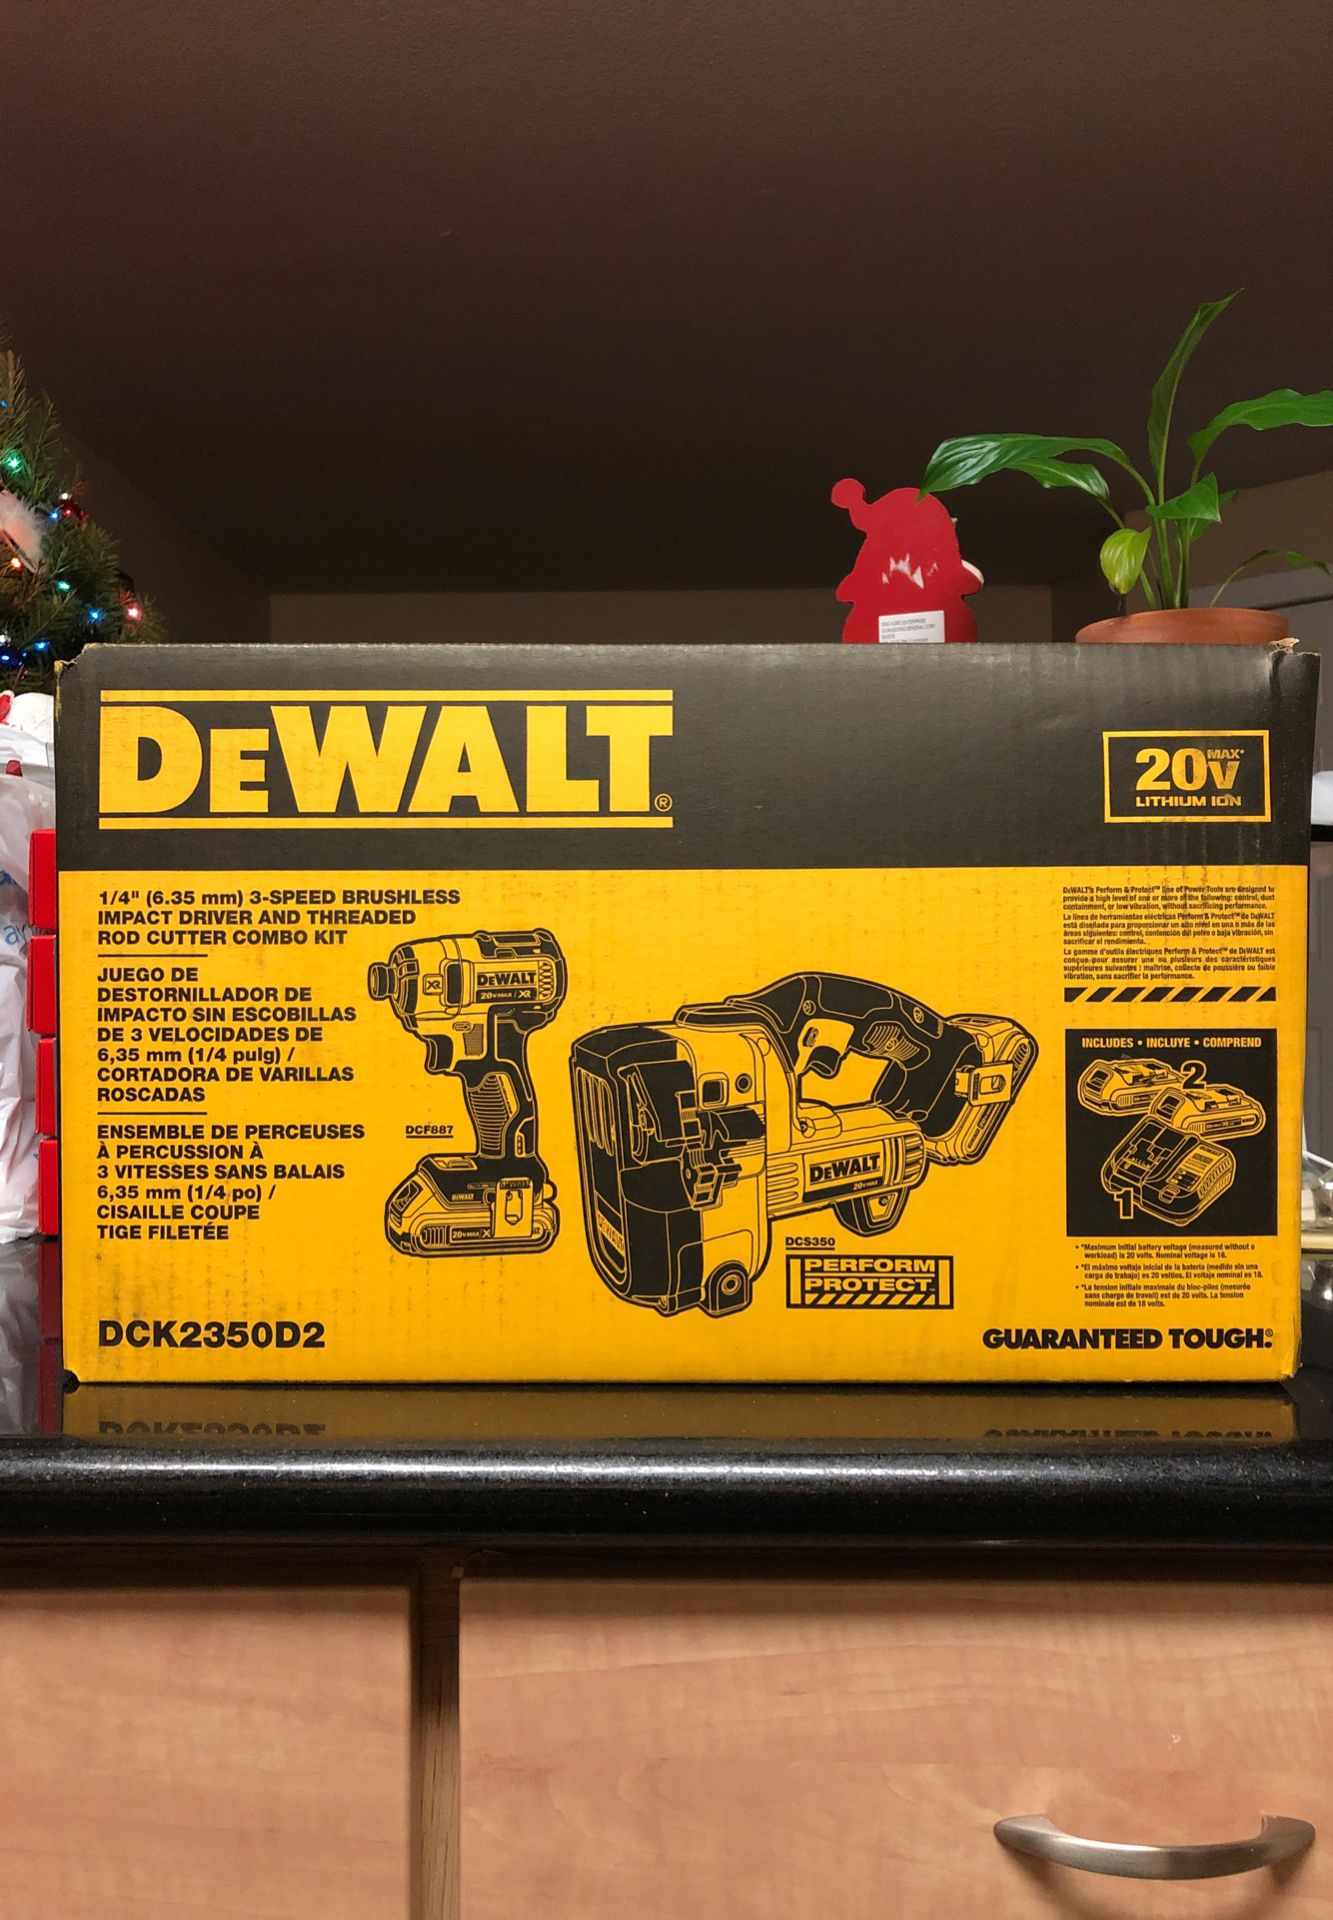 Dewalt Threaded Rod Cutter and 3-Speed Brushless Impact Driver Kit. (DCK2350D2)